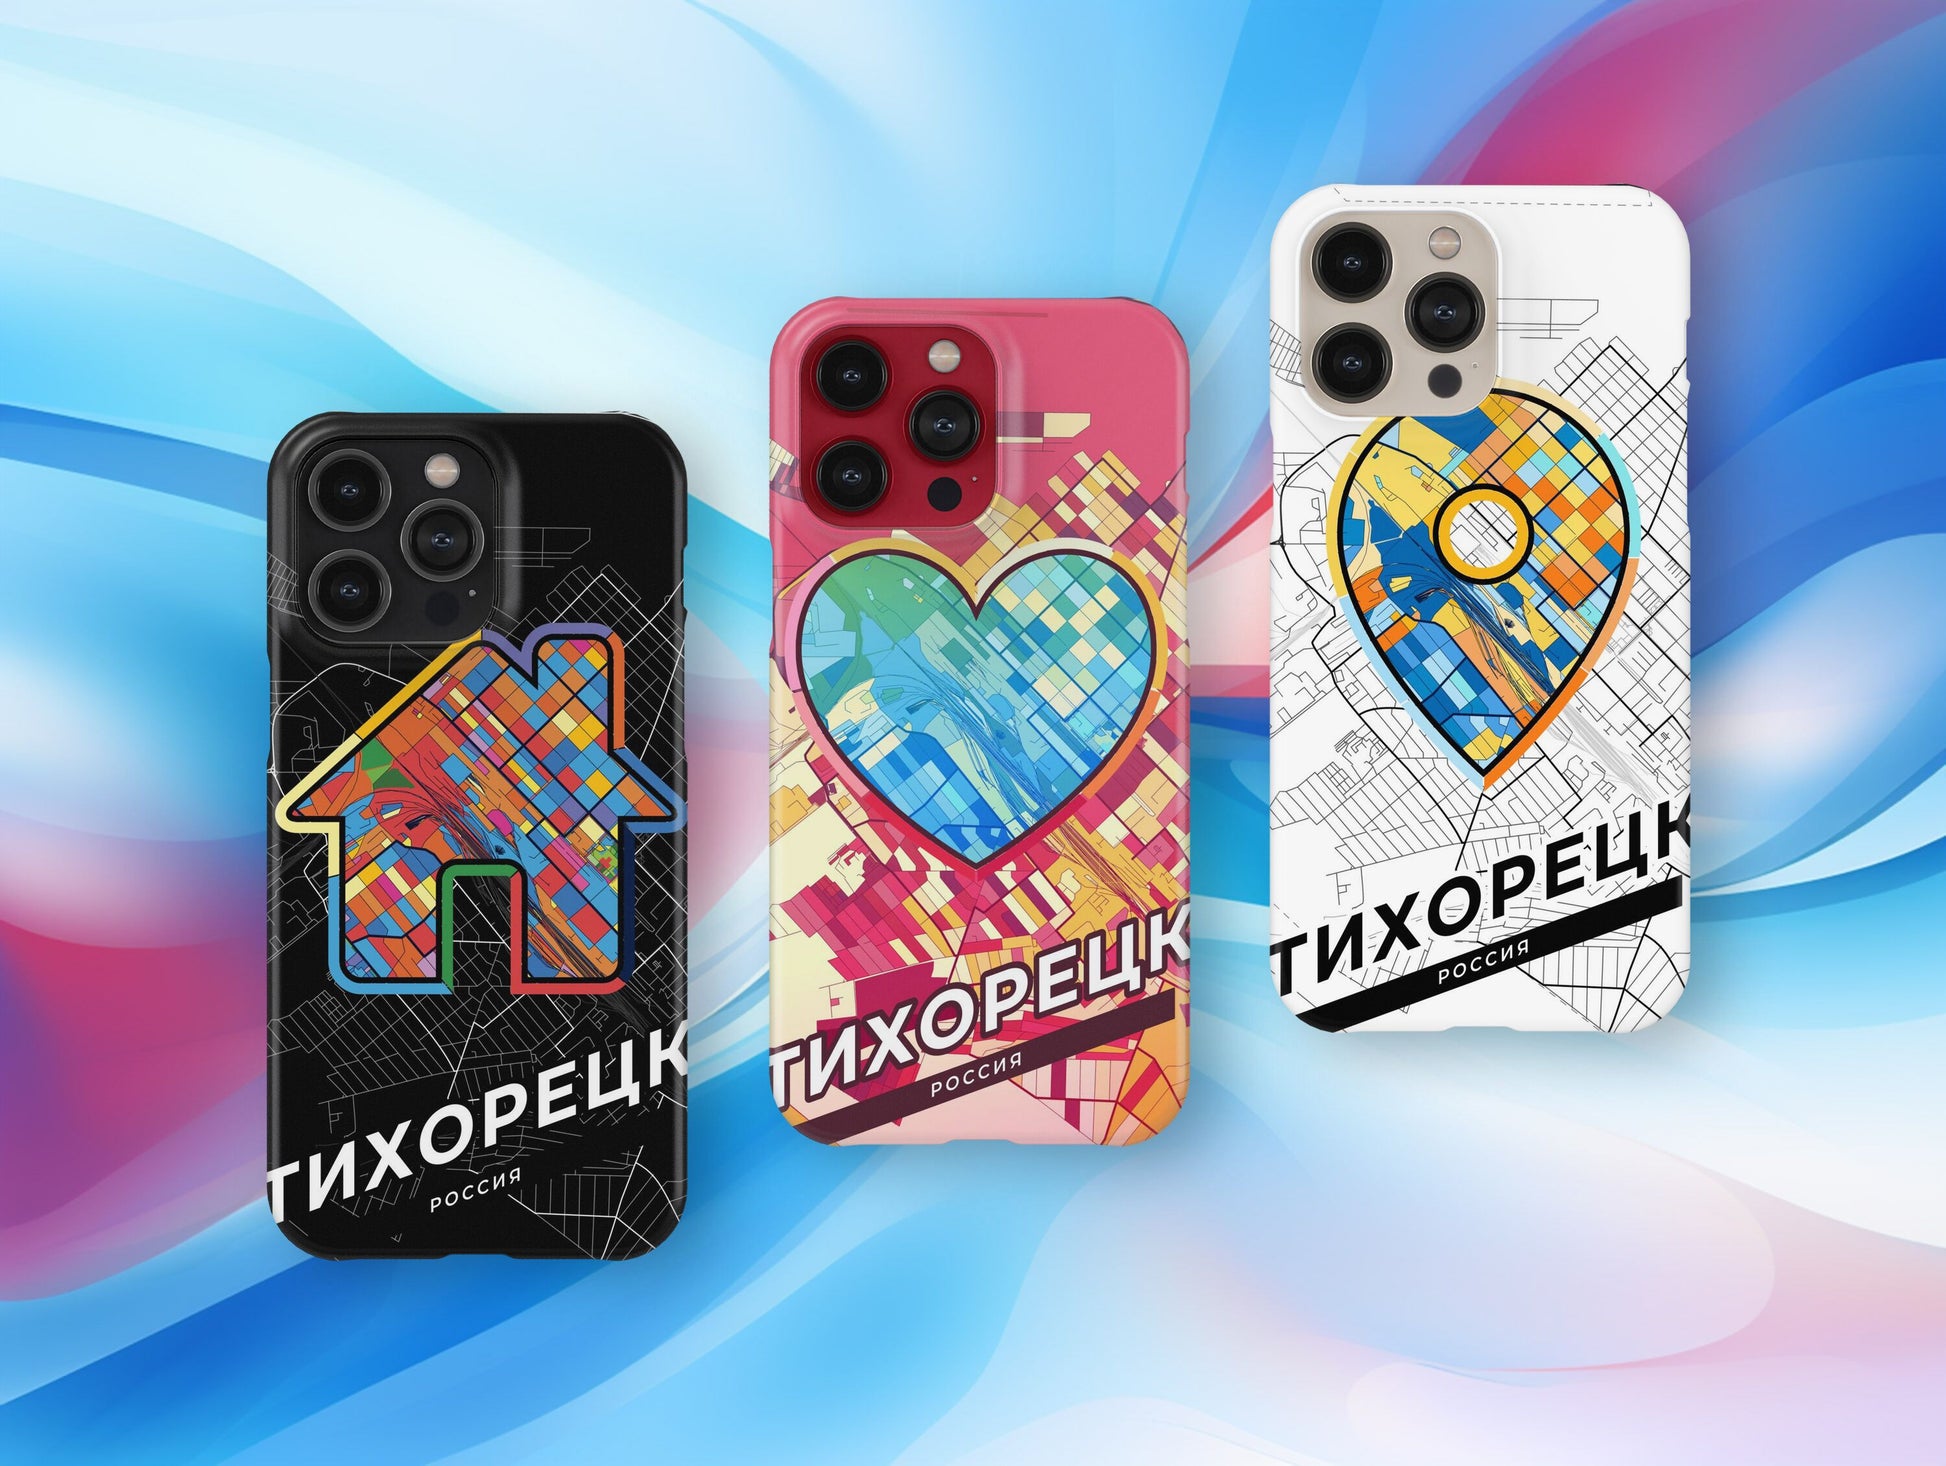 Tikhoretsk Russia slim phone case with colorful icon